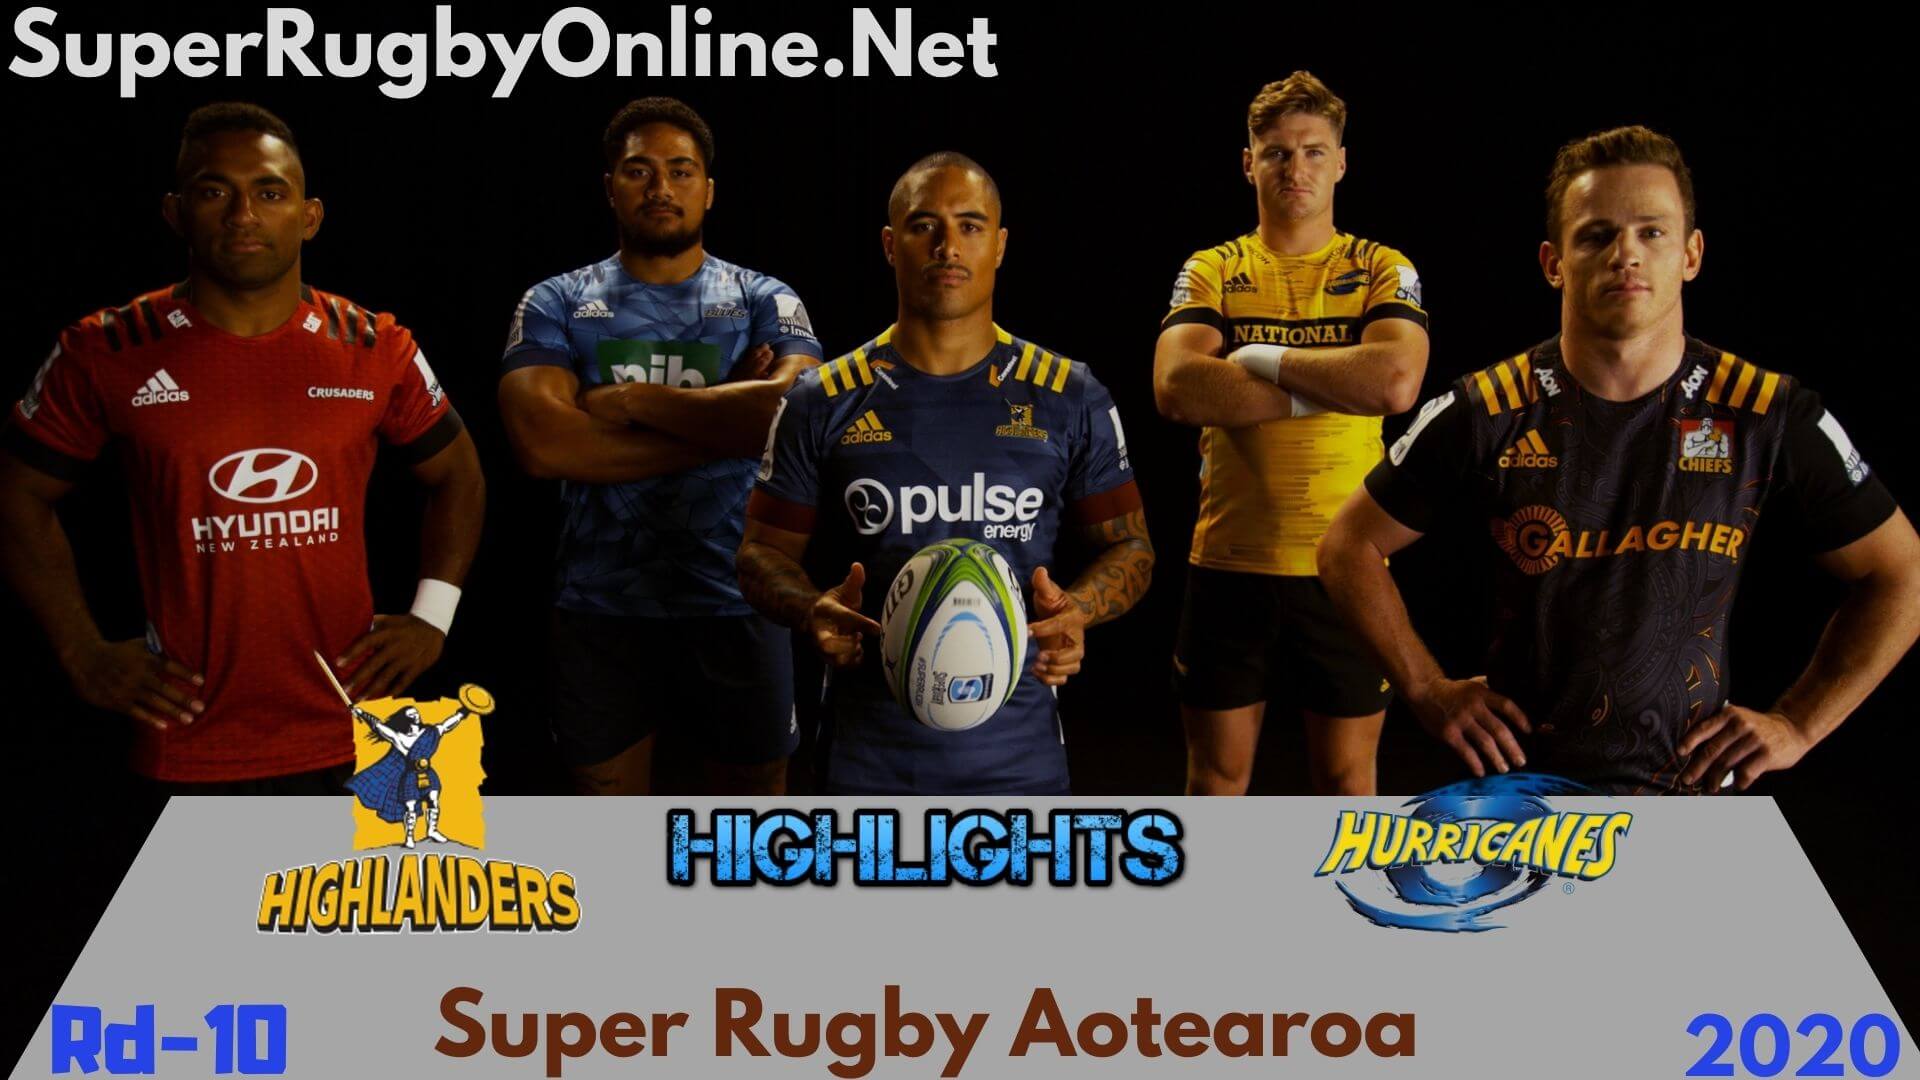 Highlanders Vs Hurricanes Rd 10 Highlights 2020 Super Rugby Aotearoa